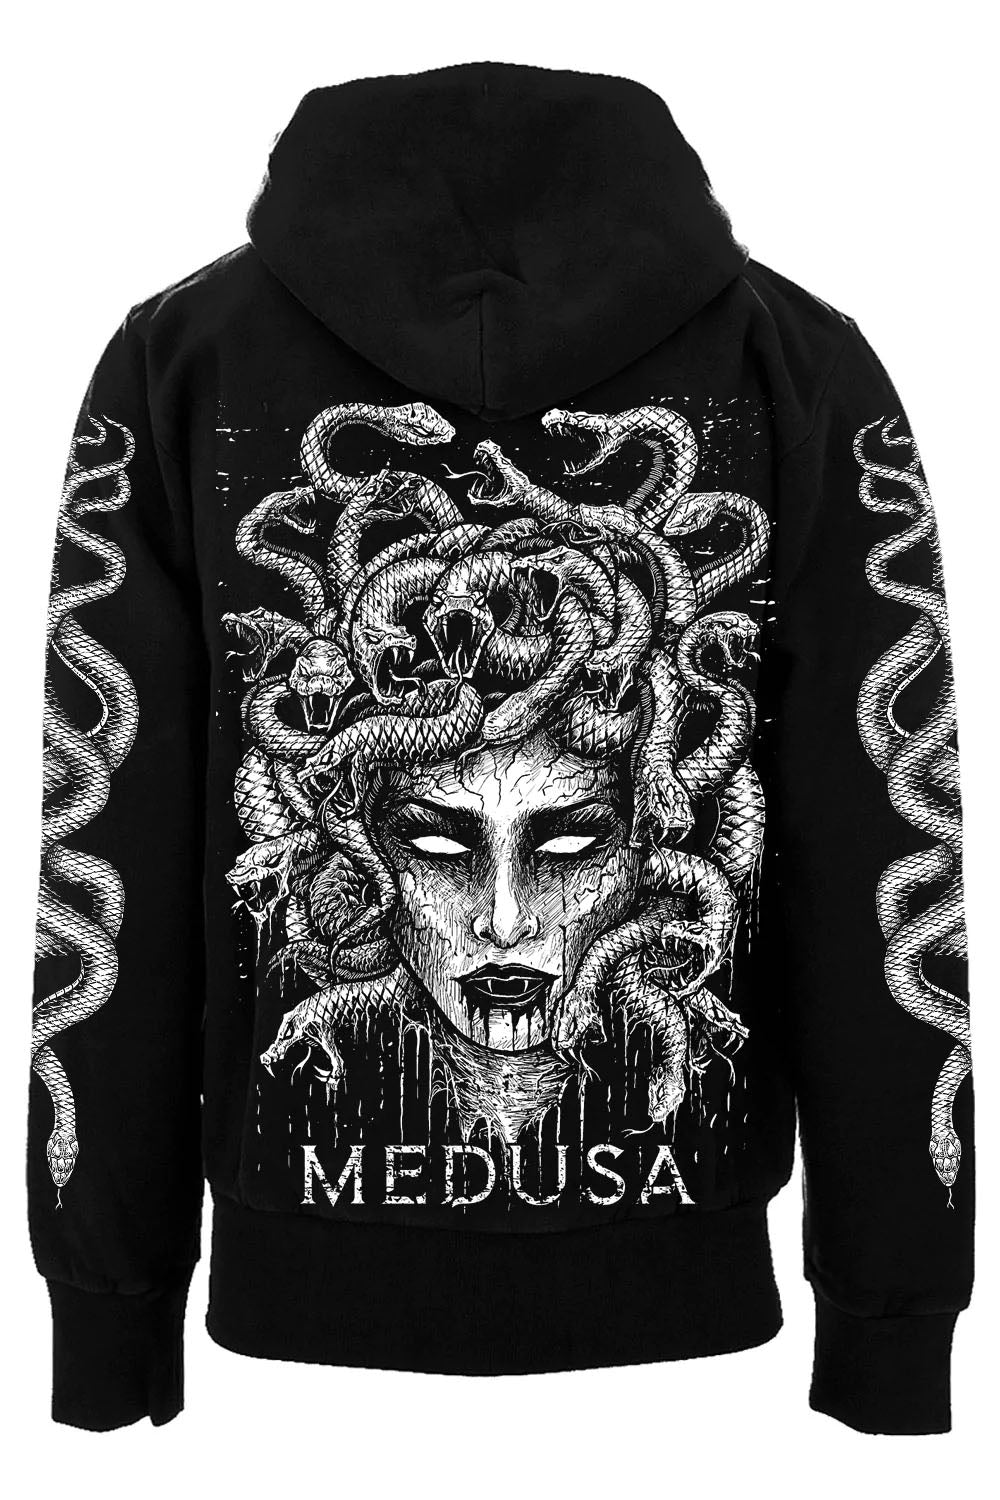 Medusa Hoodie [Zipper or Pullover]